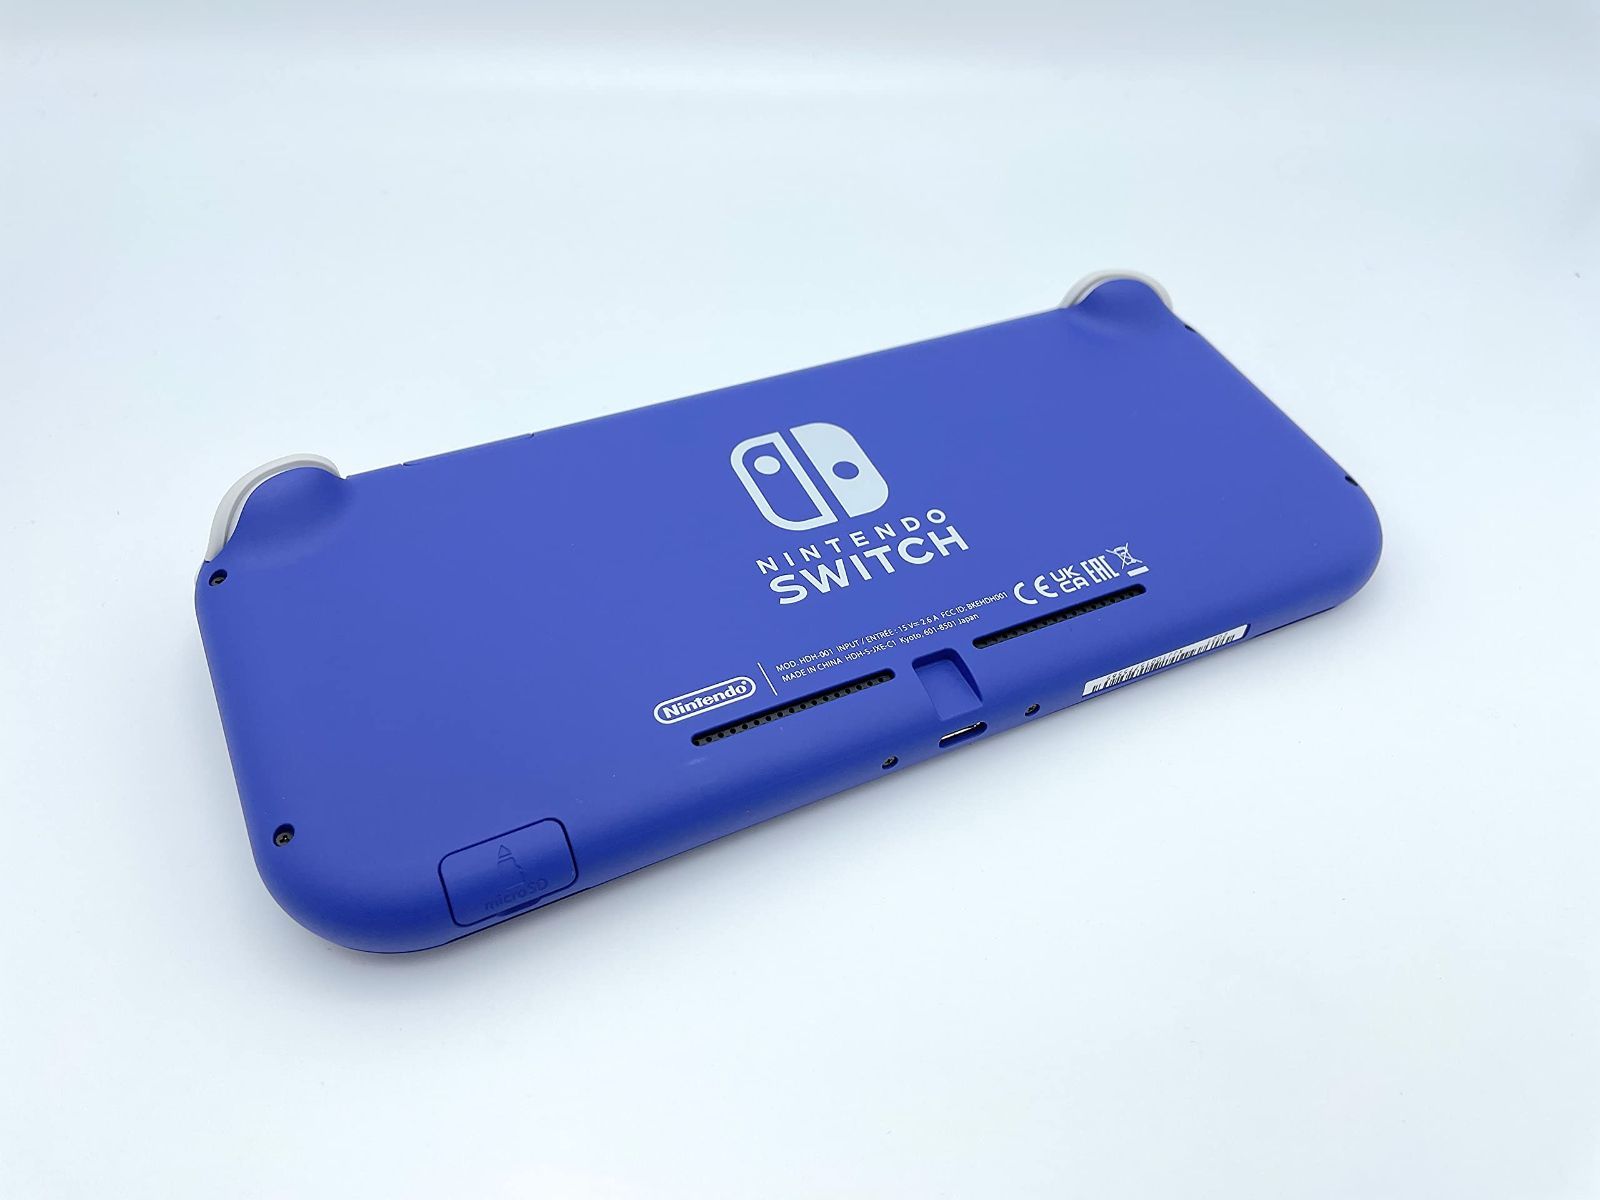 Nintendo Switch Lite ブルー スイッチライト 完品 - 【公式】ゲーム